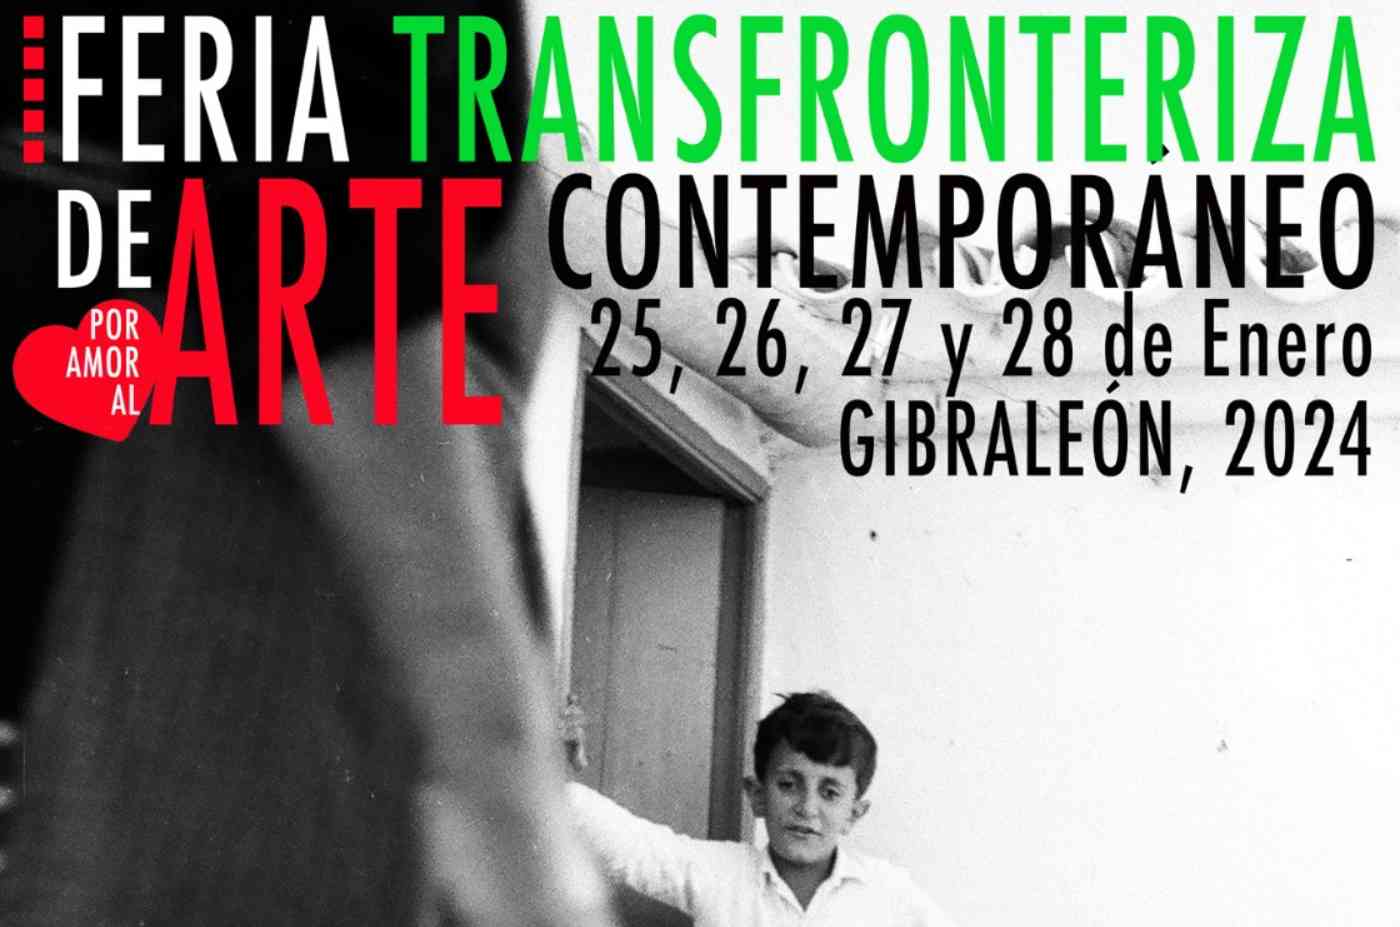 Feria transfronteriza de arte contemporaneo Gibraleon 2024